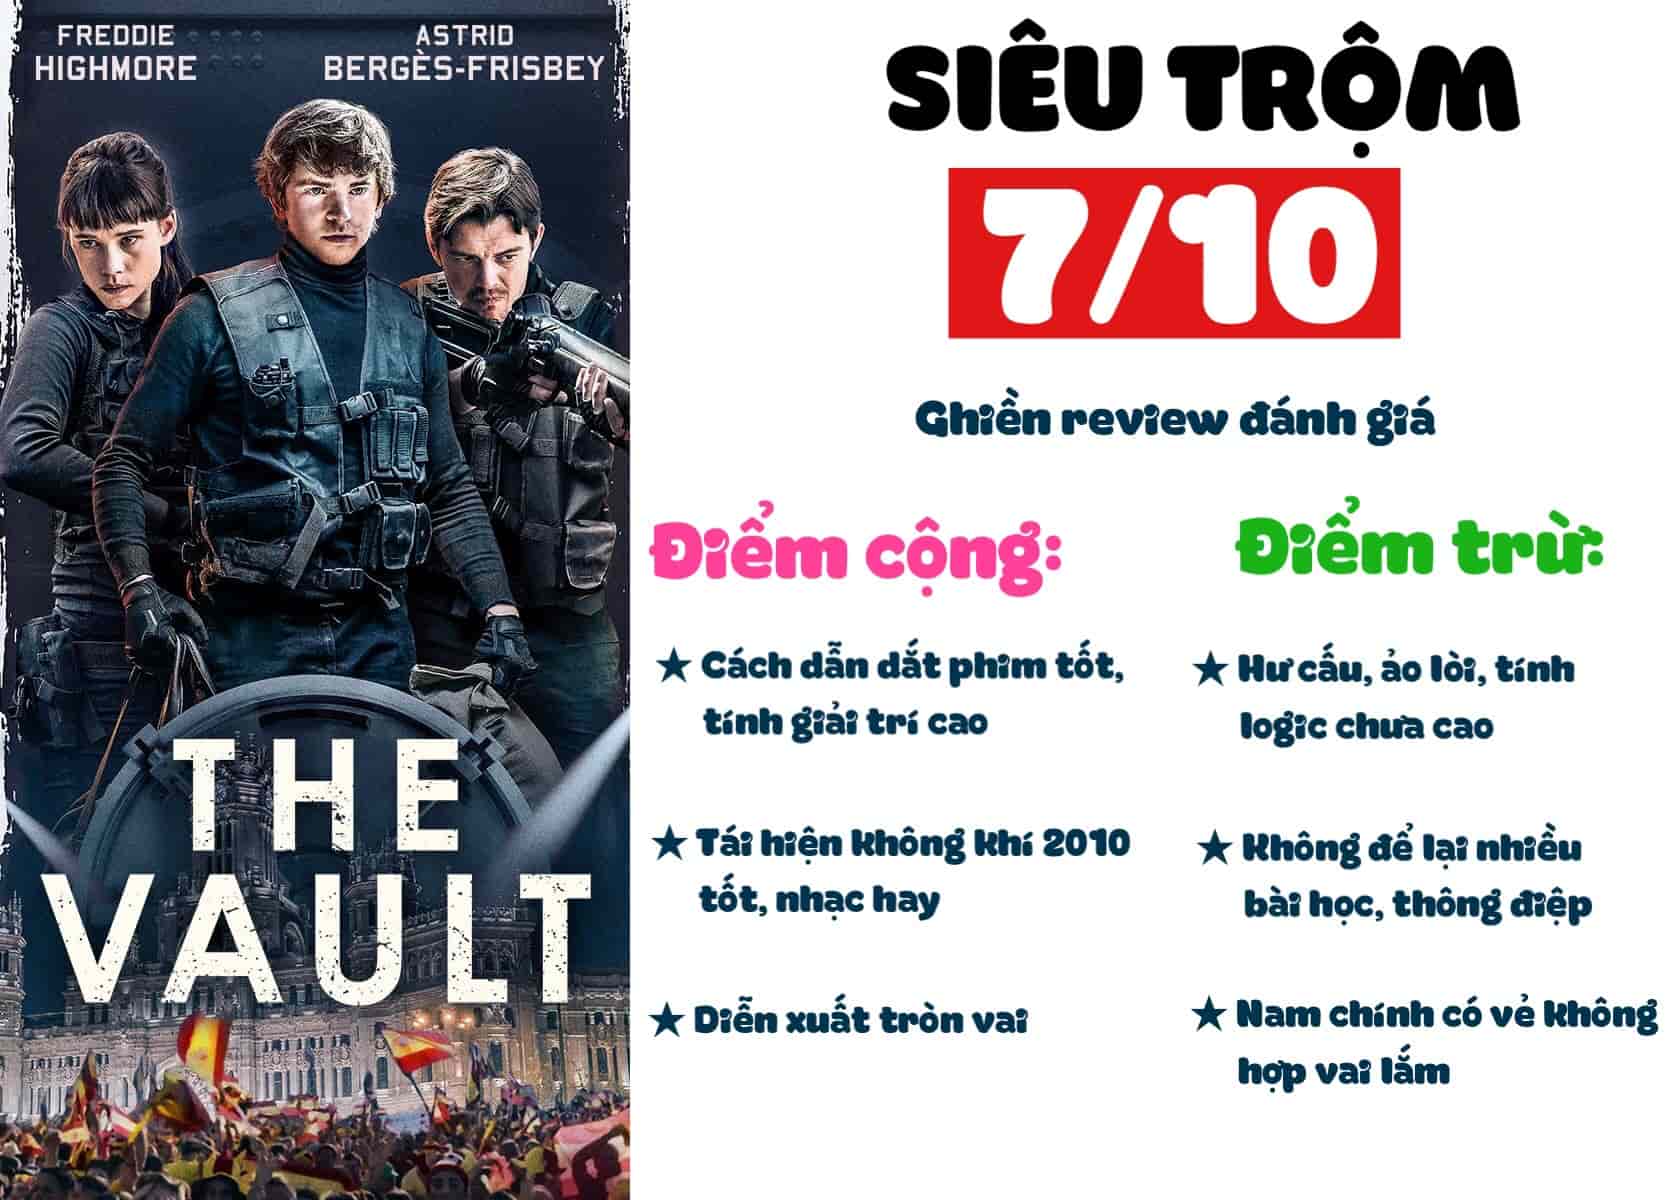 ghien review - Sieu trom - the vault -way down